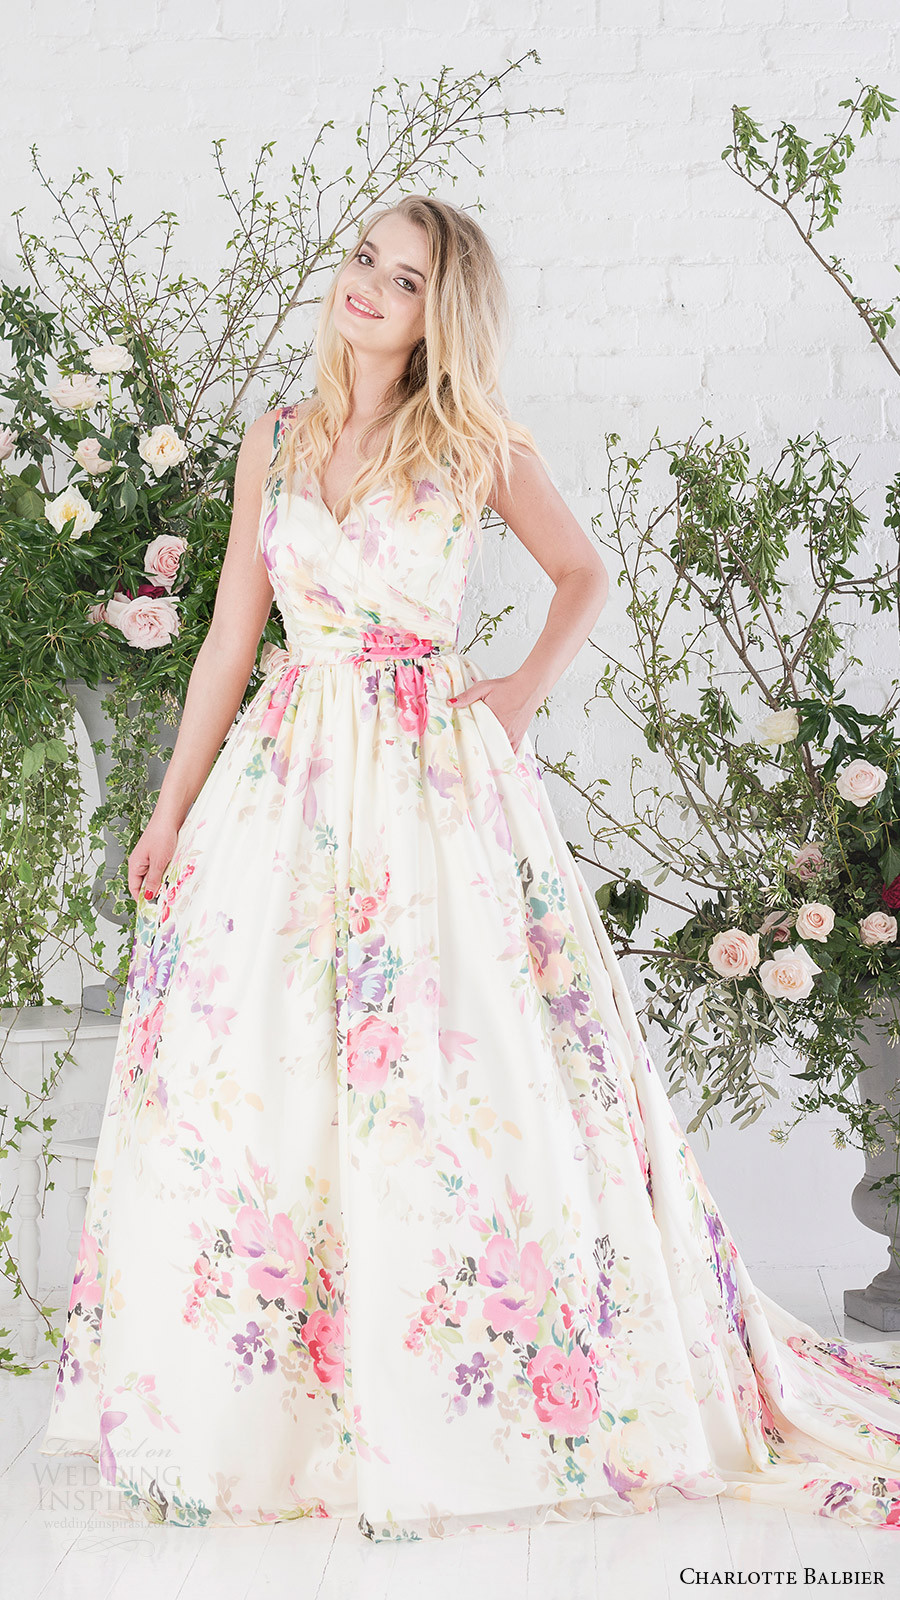 Floral Print Wedding Dress
 Charlotte Balbier 2017 Wedding Dresses — “Untamed Love